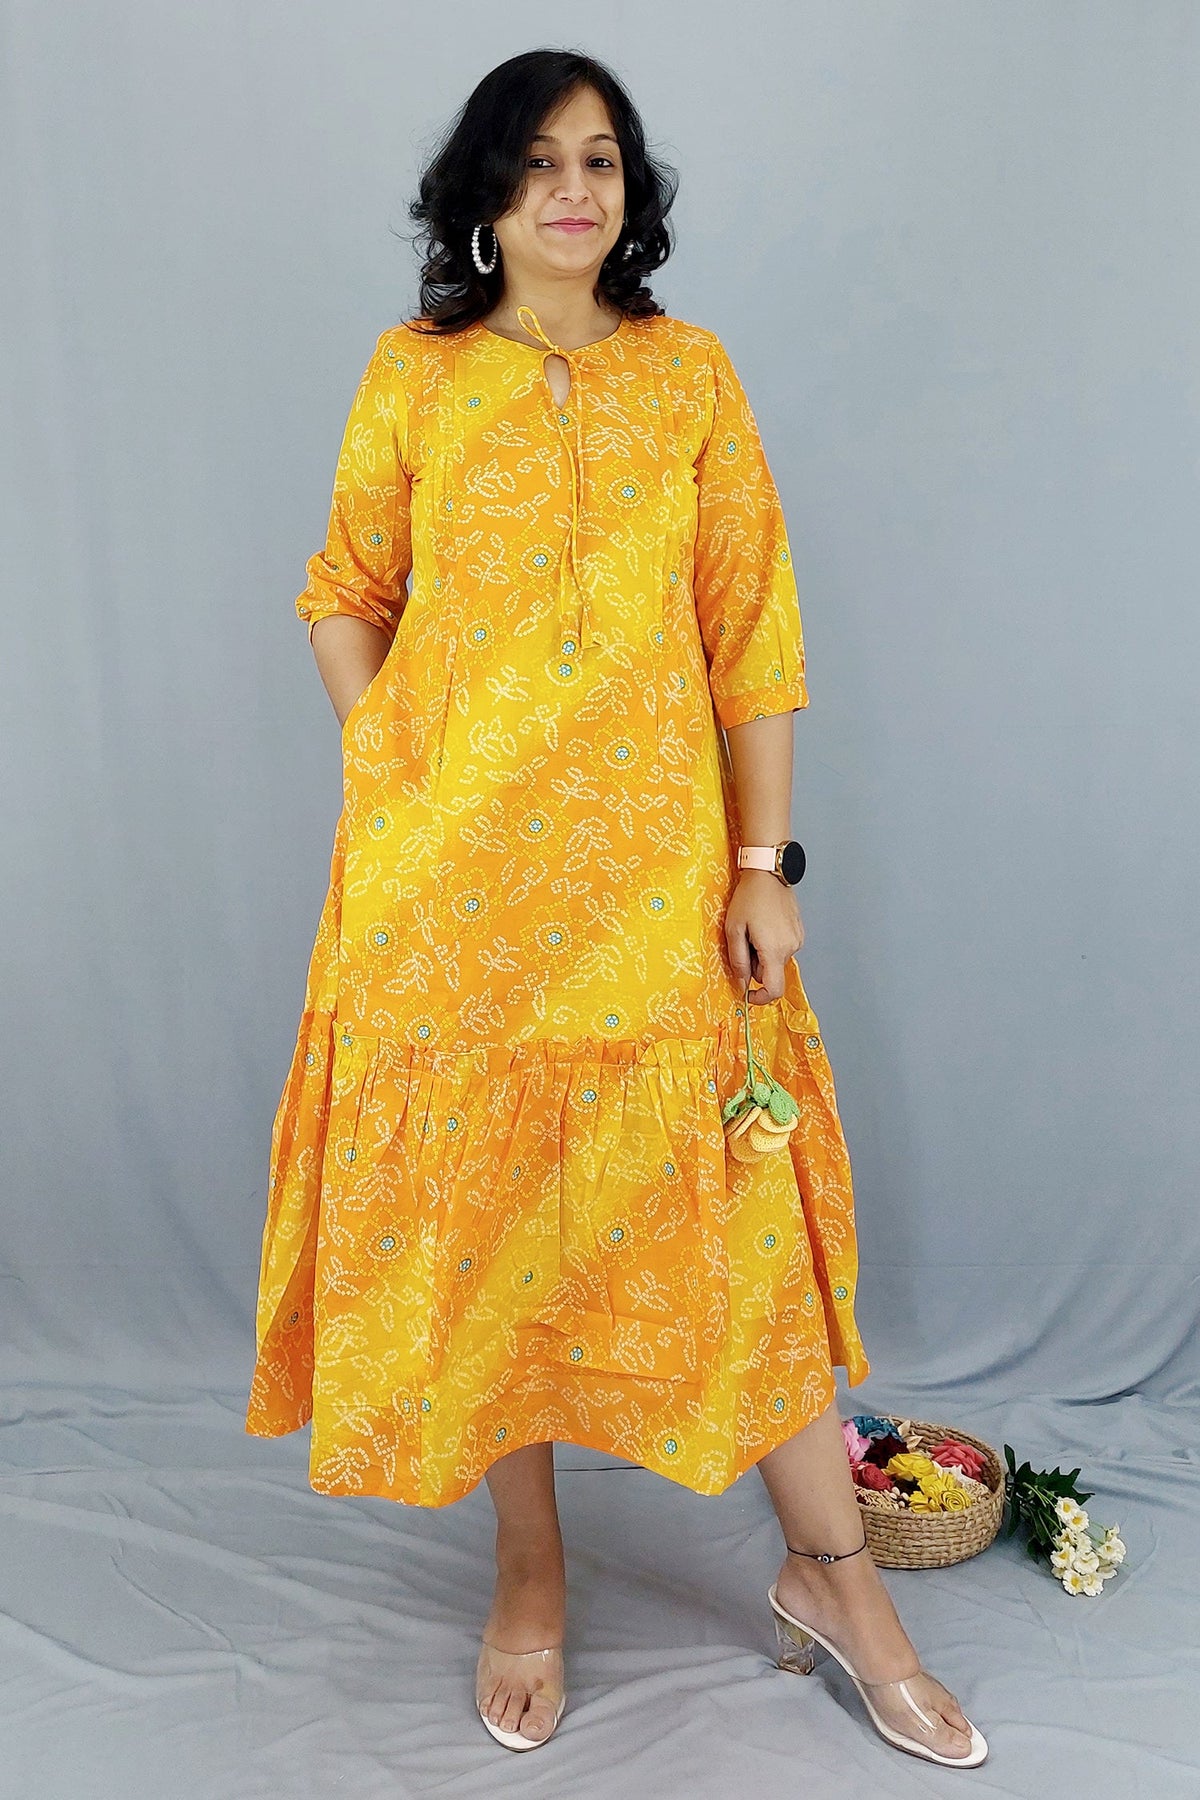 Yellow Printed Cotton Maxi Dress Dress Yellow Printed Cotton Maxi Dress Dress Yellow Printed Cotton Maxi Dress Dress 